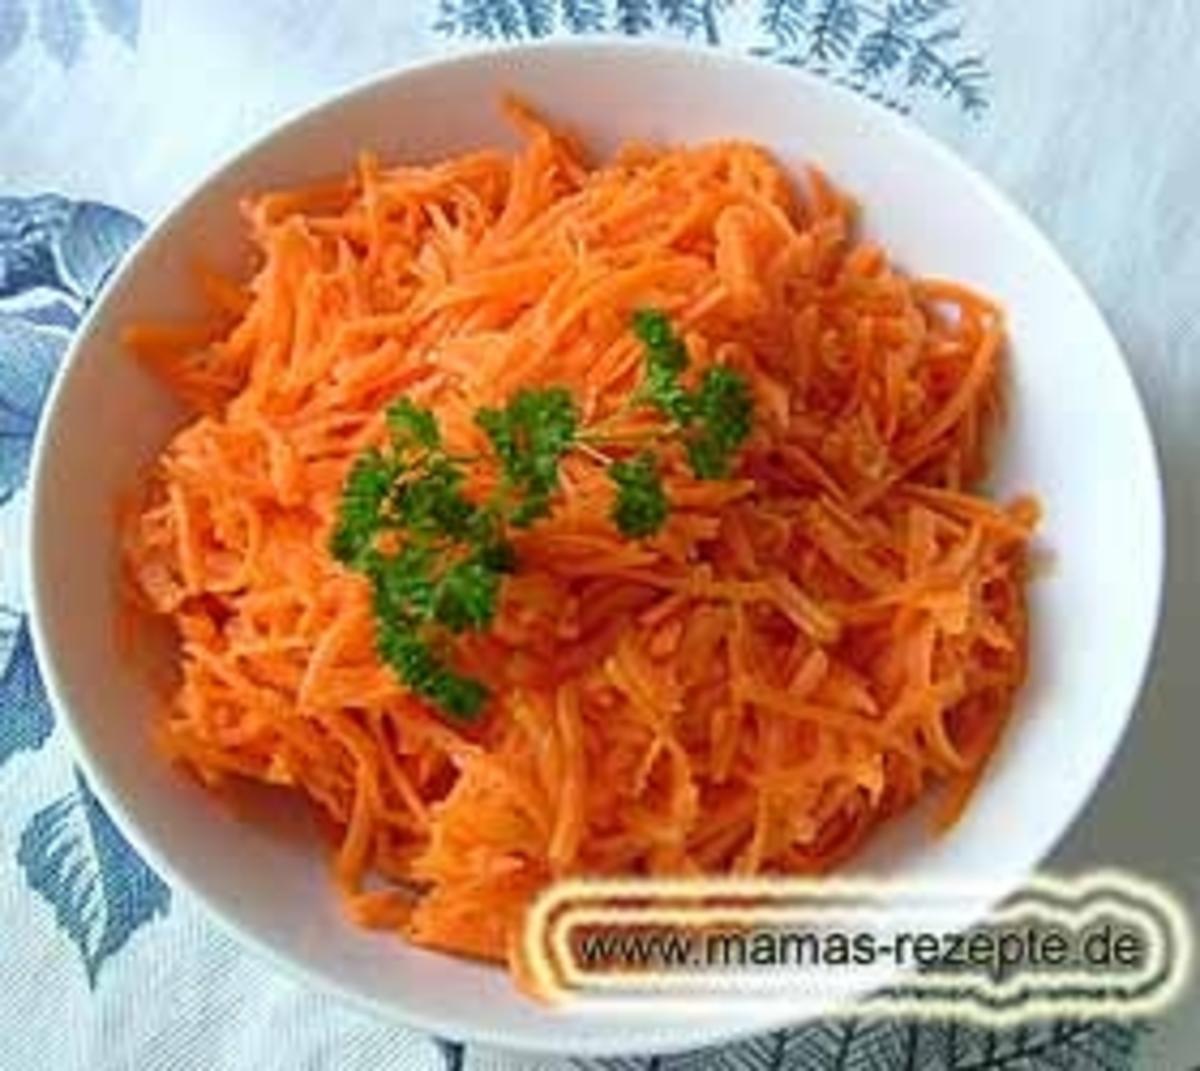 Karottensalat mit Möhren und Apfel - Rezept mit Bild - kochbar.de